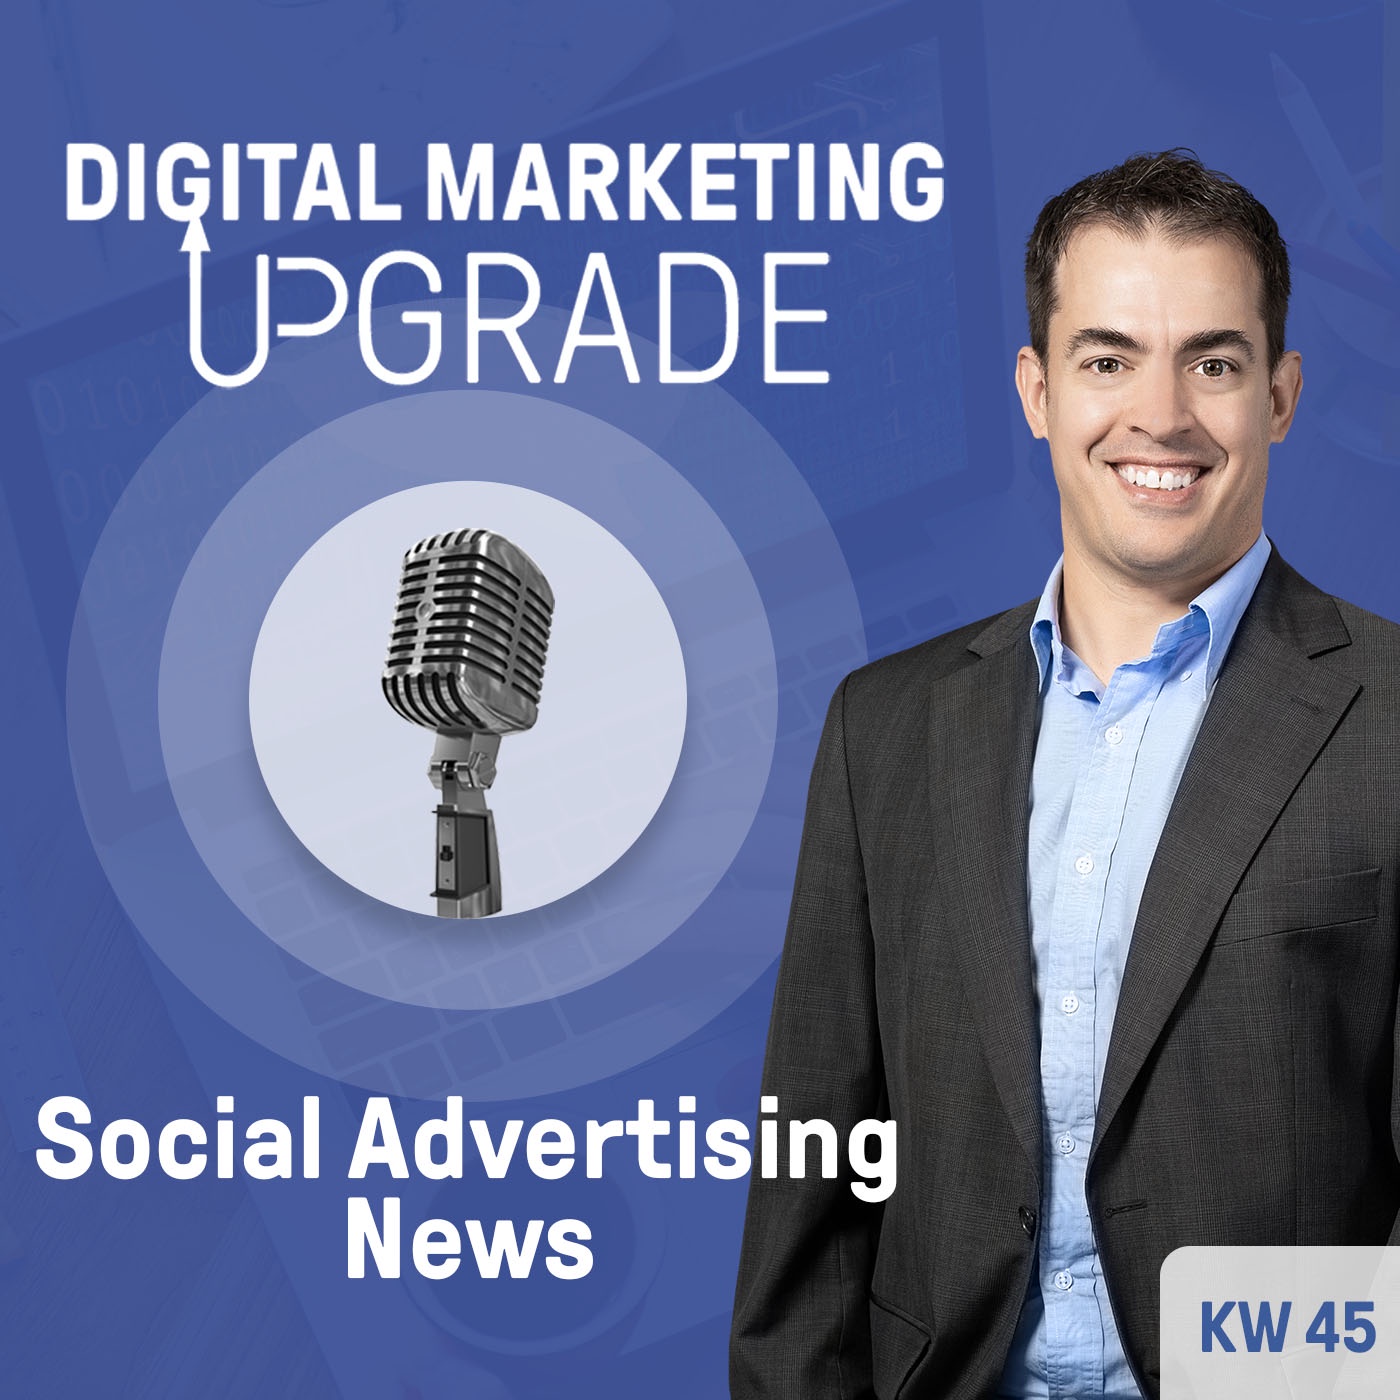 Social Advertising News - KW 45/22